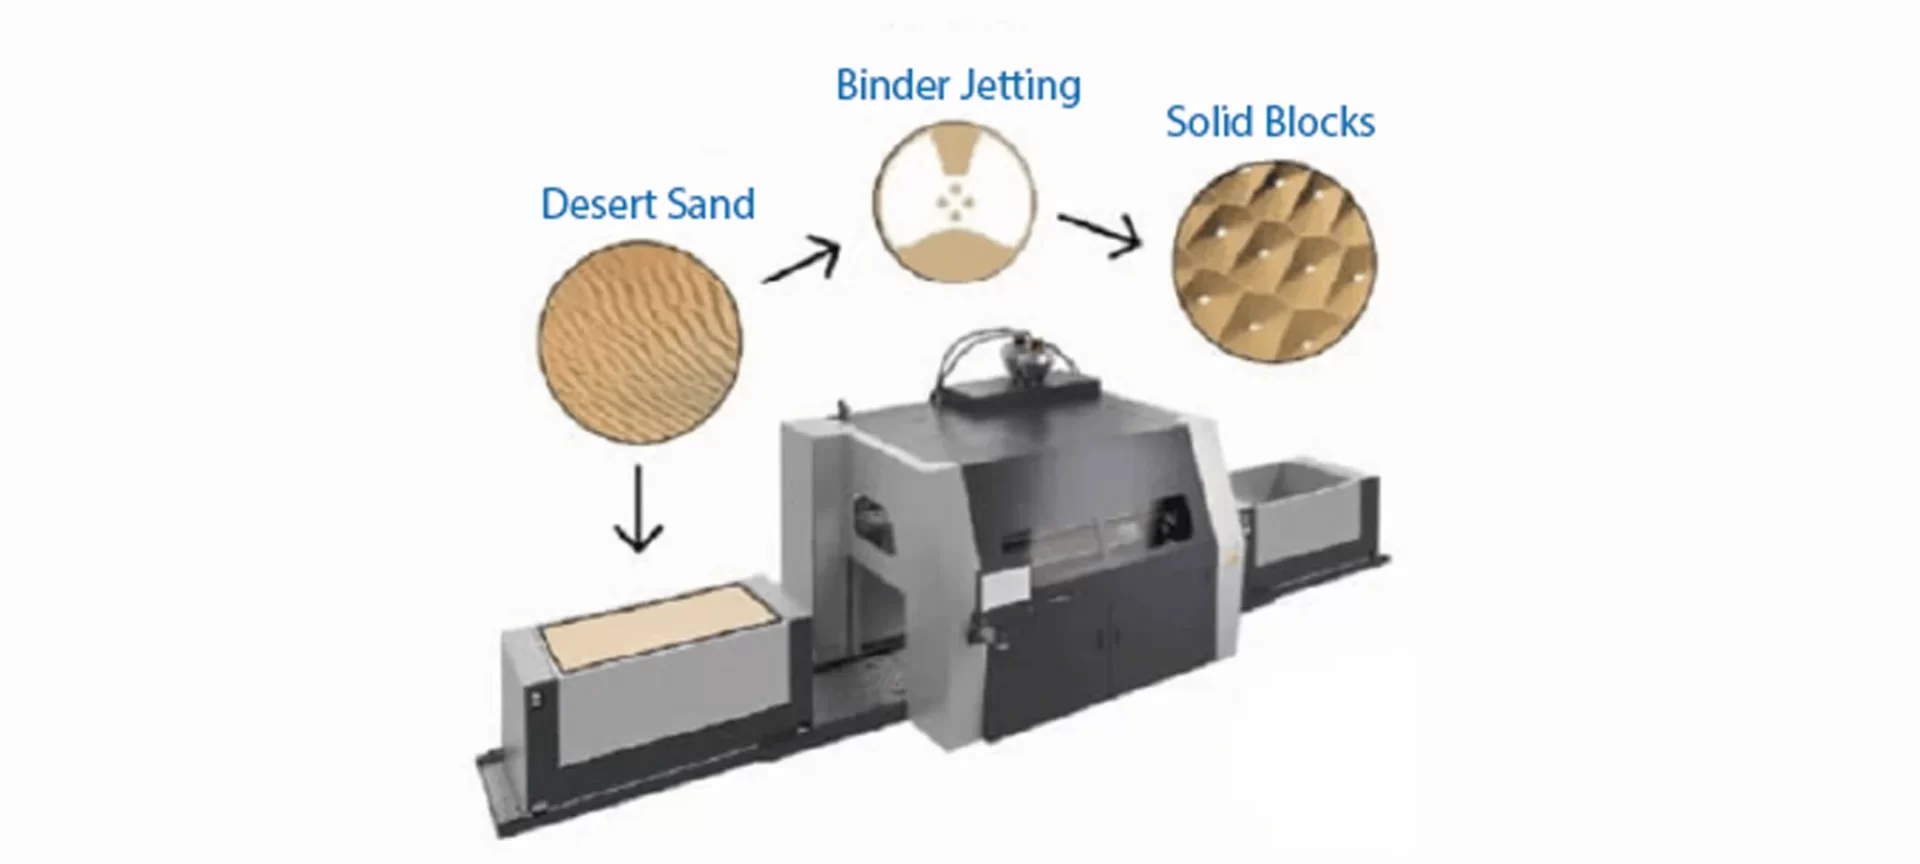 Sandstone 3D Printing Using Binder Jetting